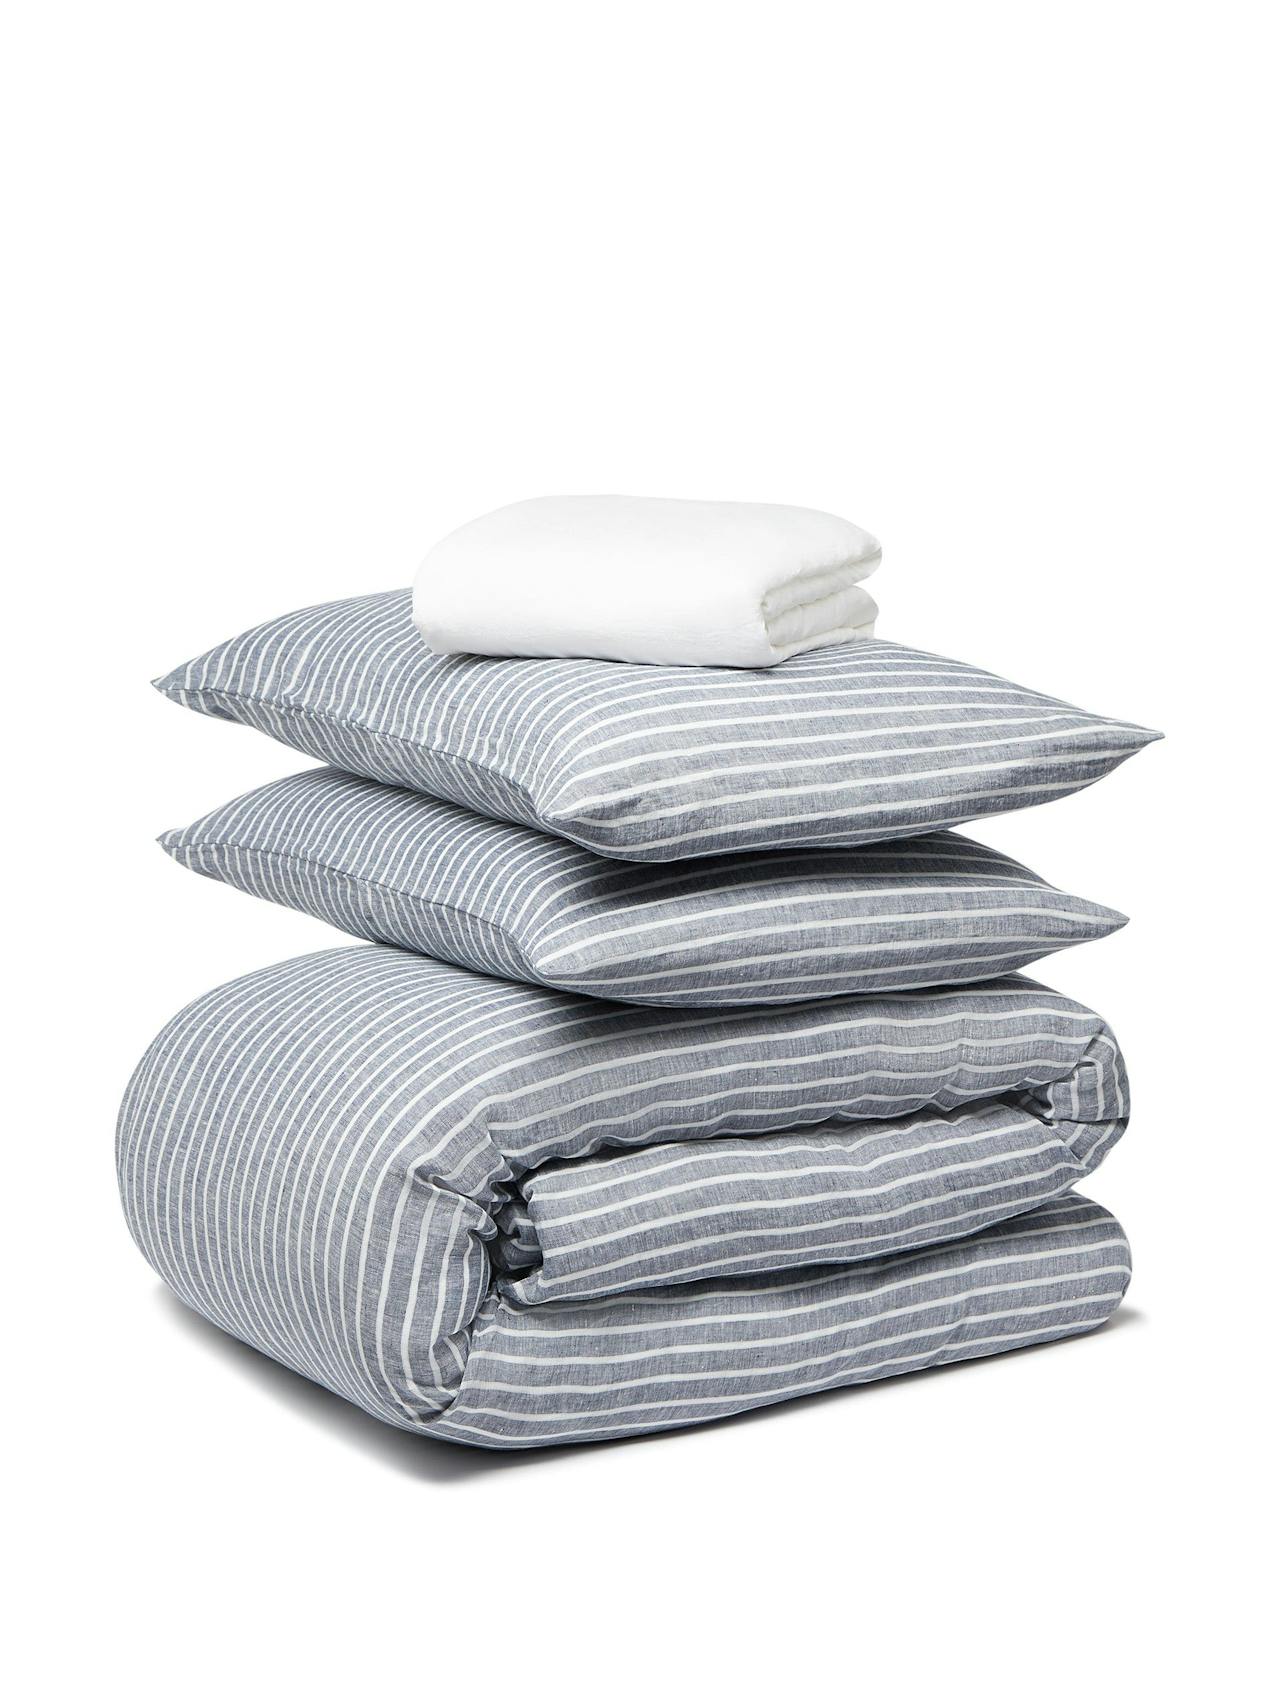 Stripe linen bedding bundle